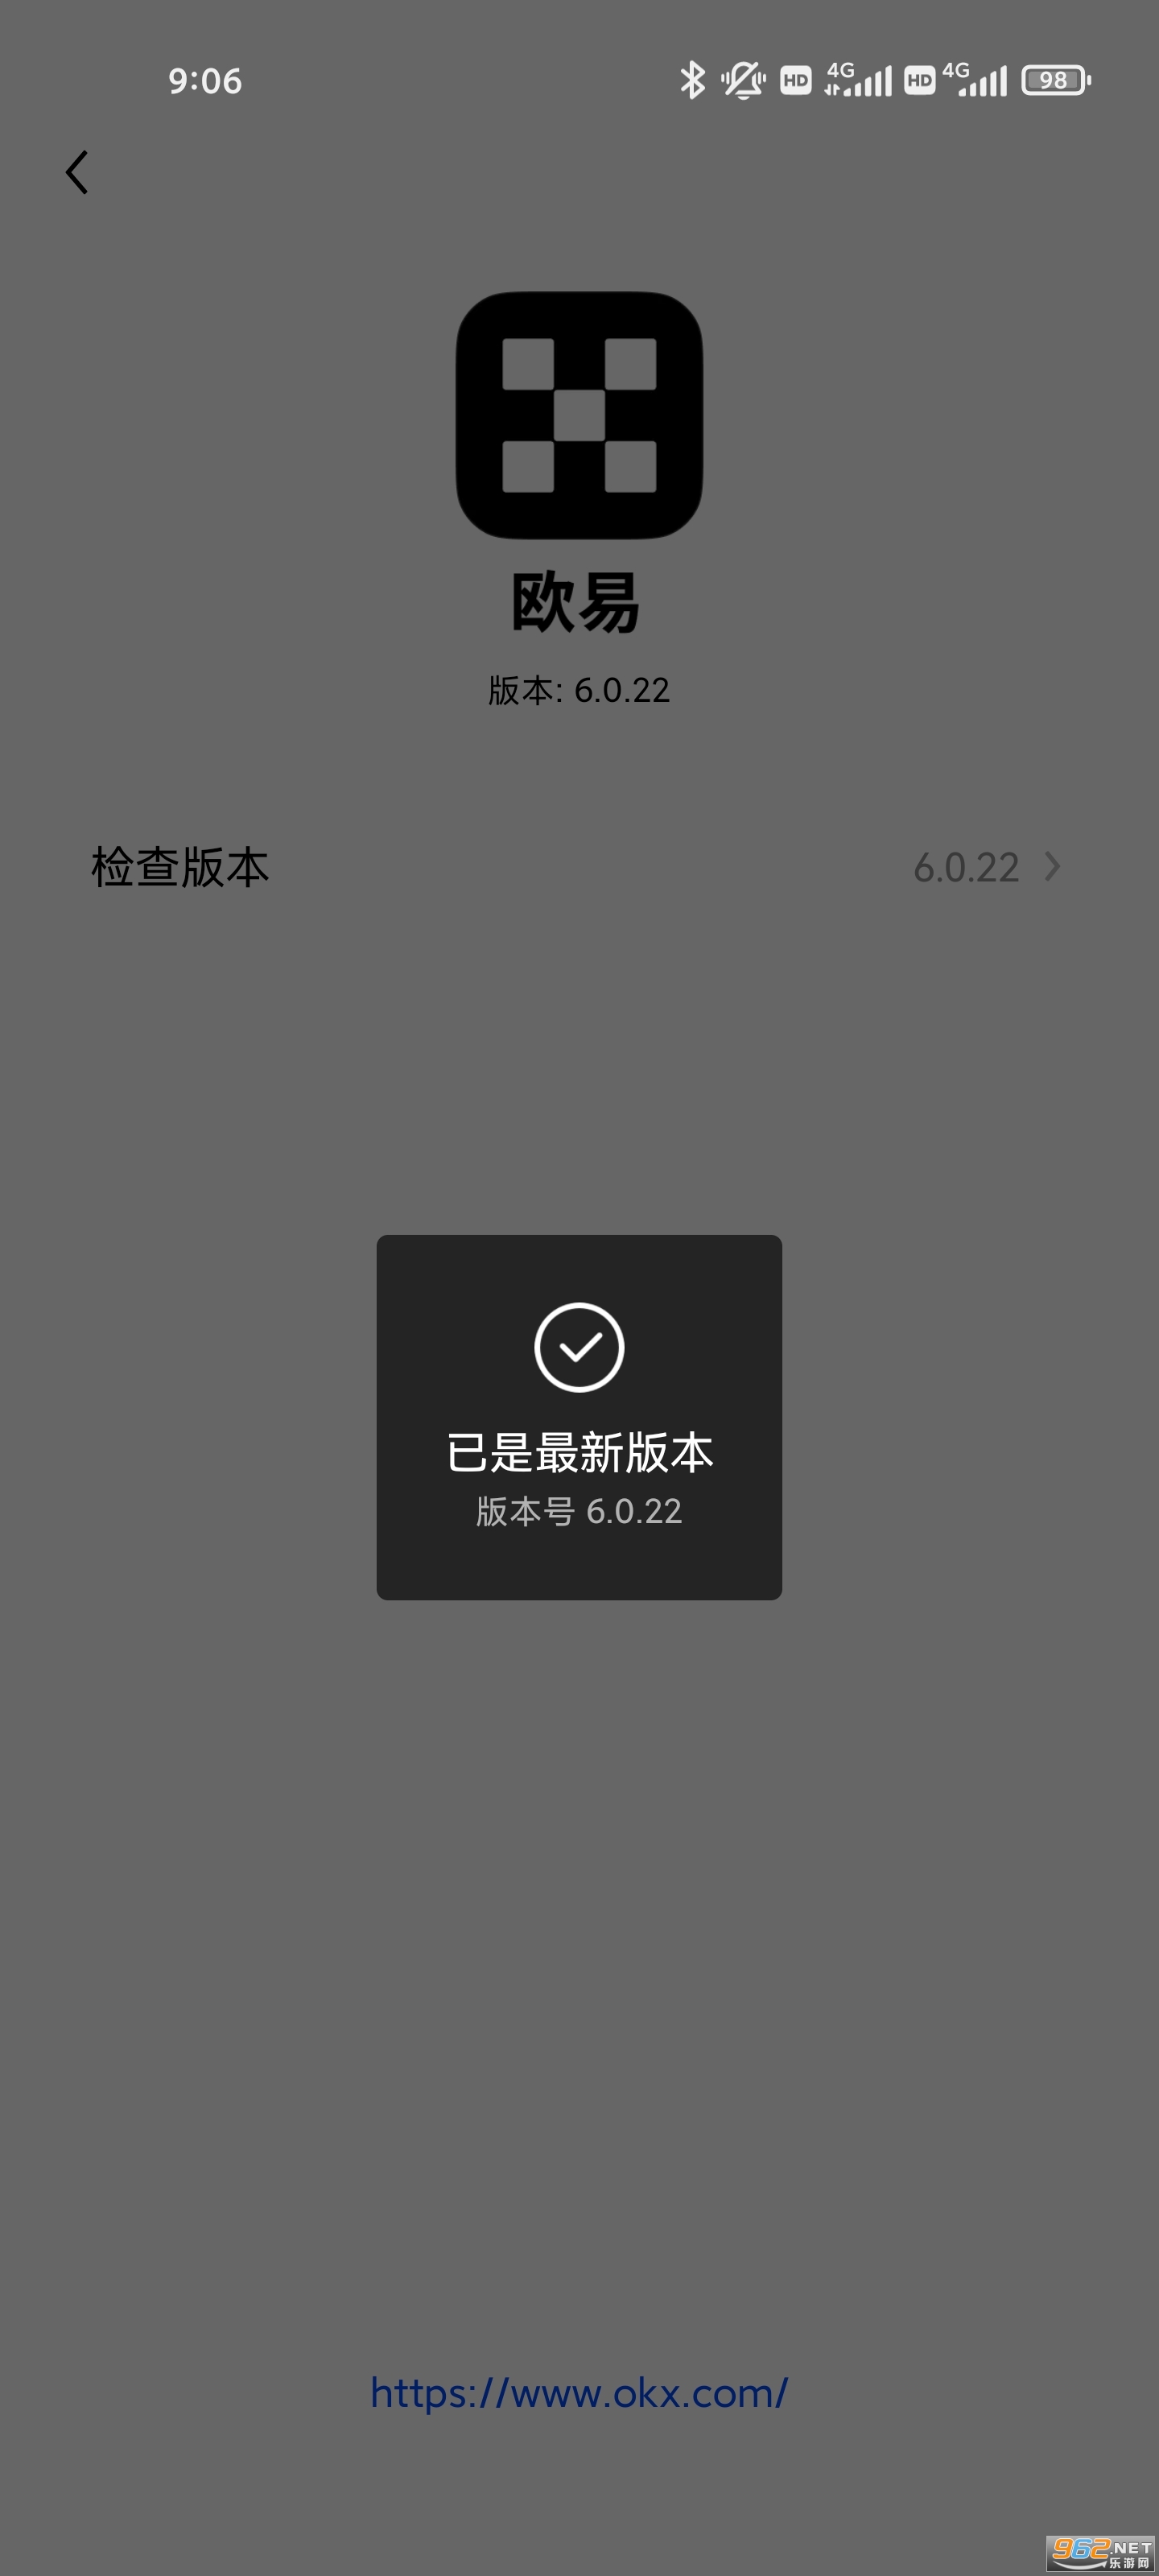 okex欧易官方app 最新版本v6.0.22